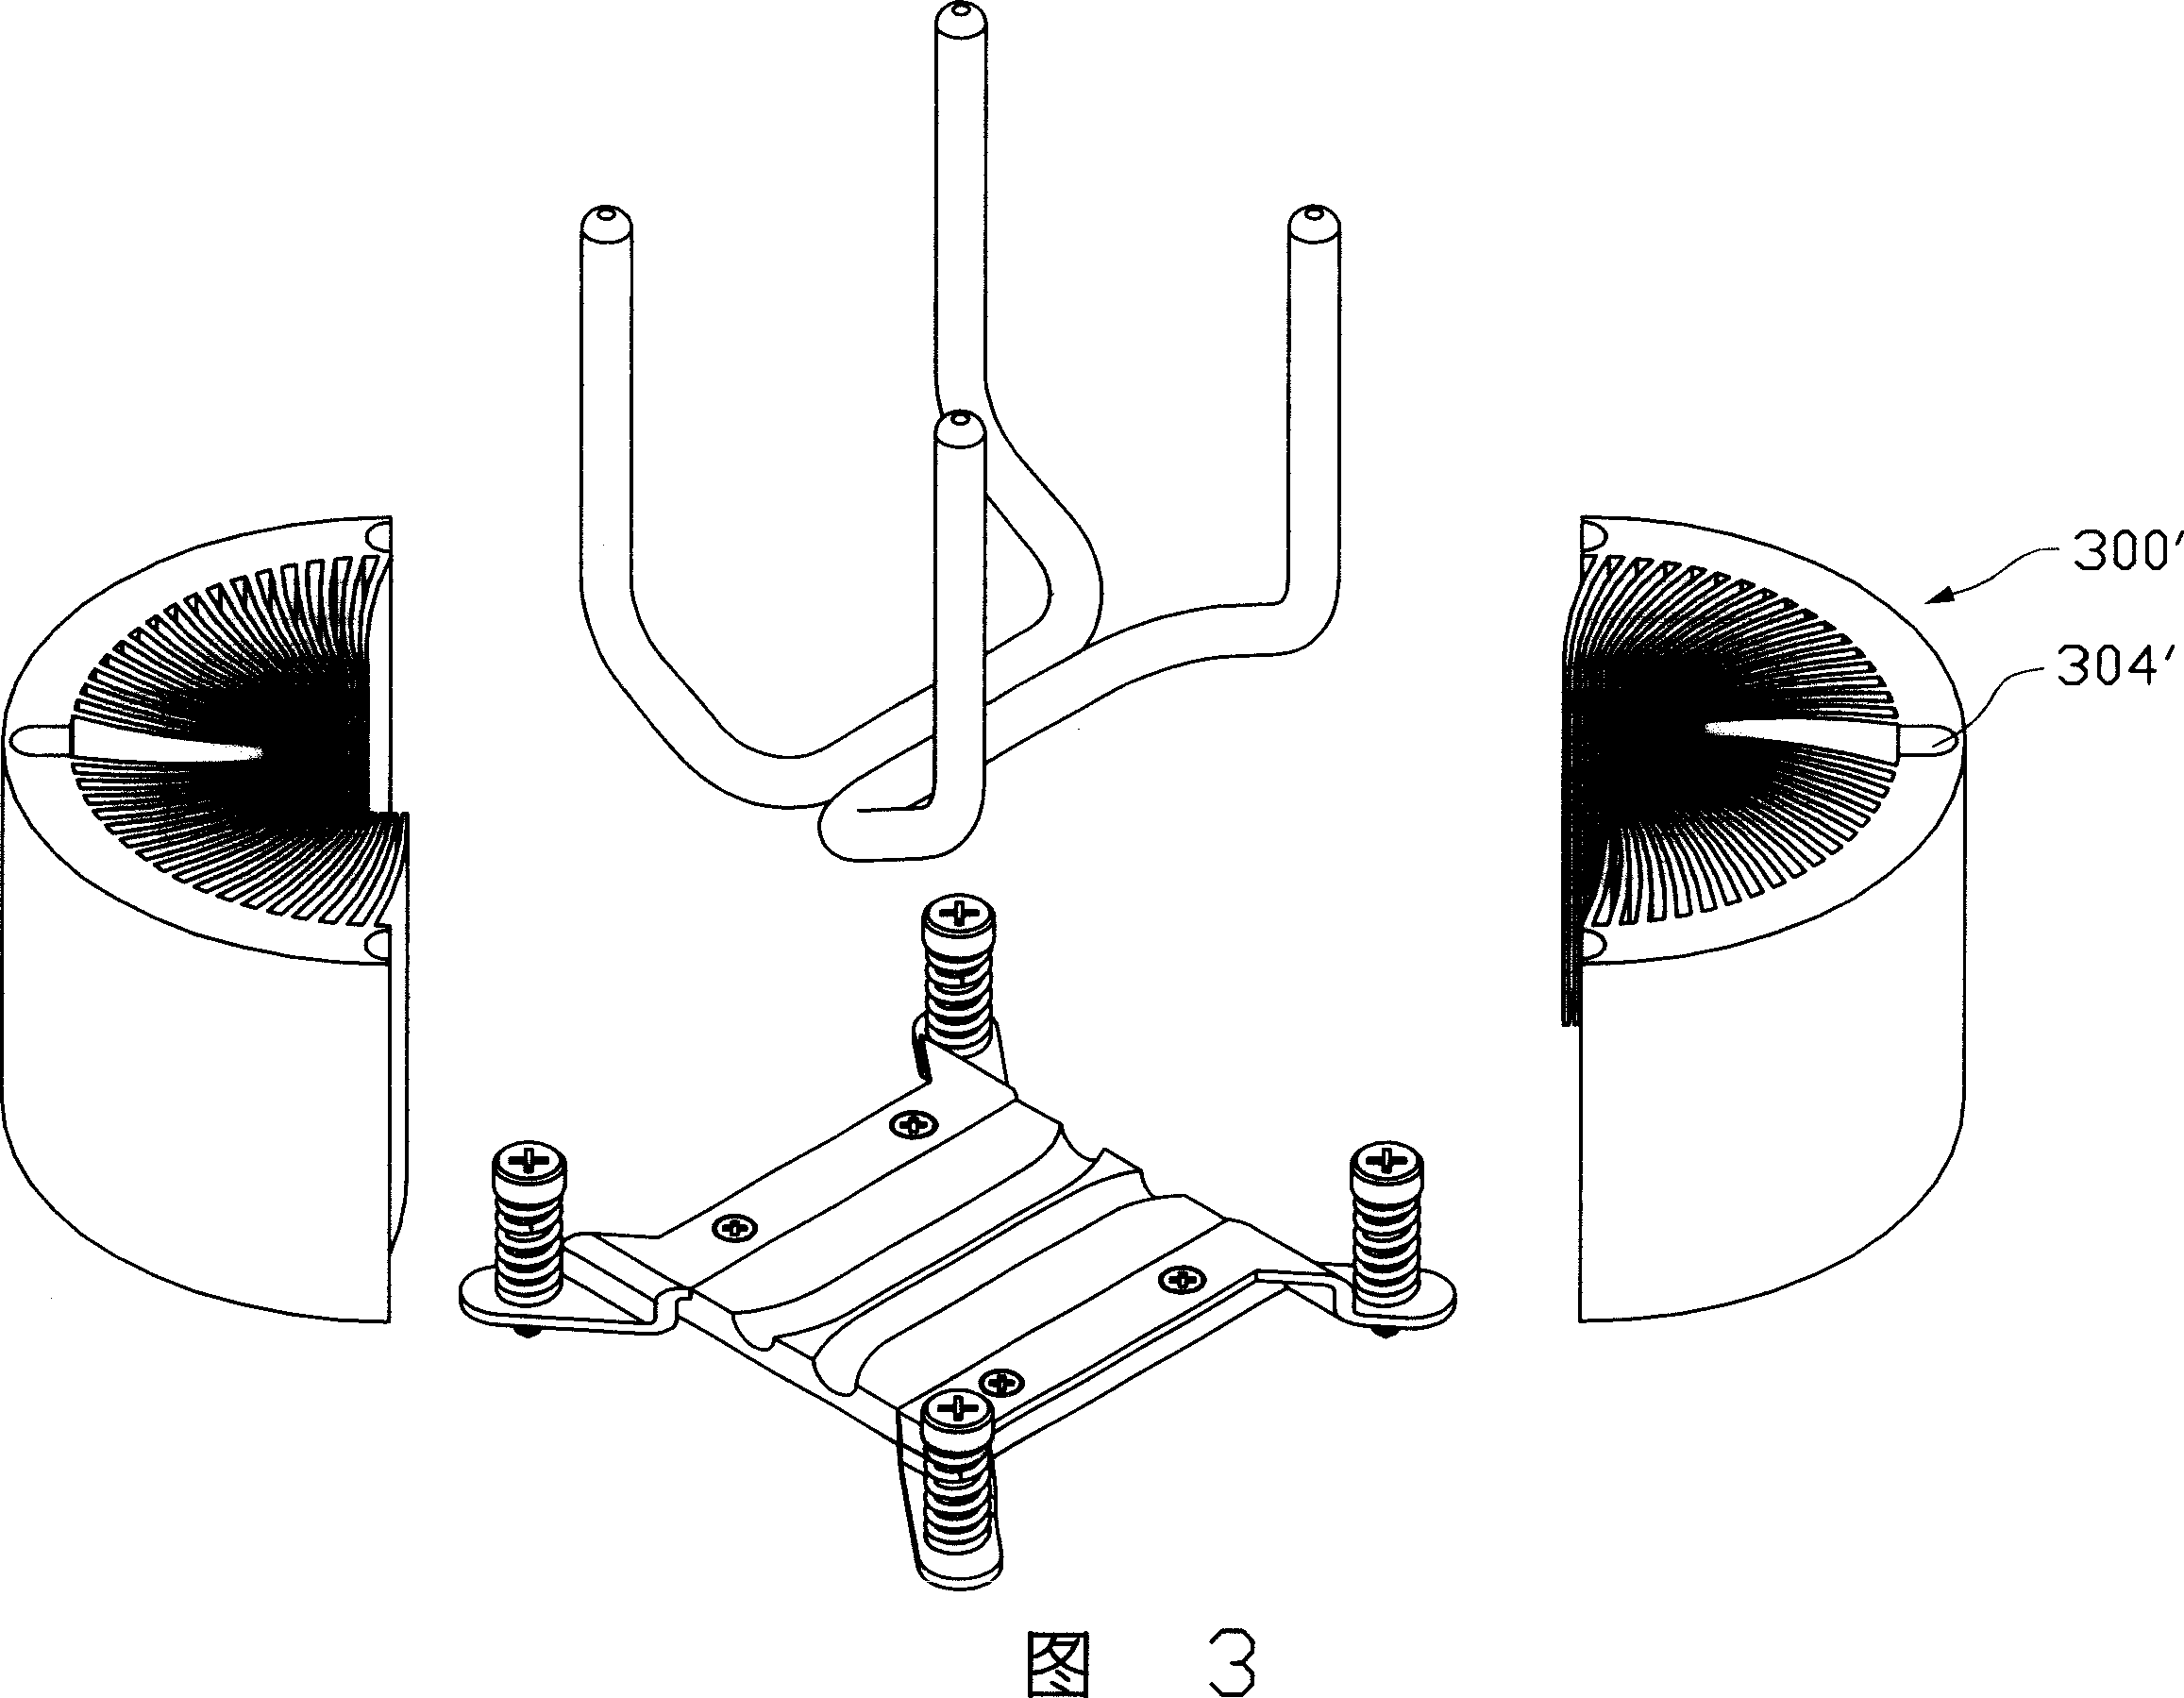 Heat tube radiating device